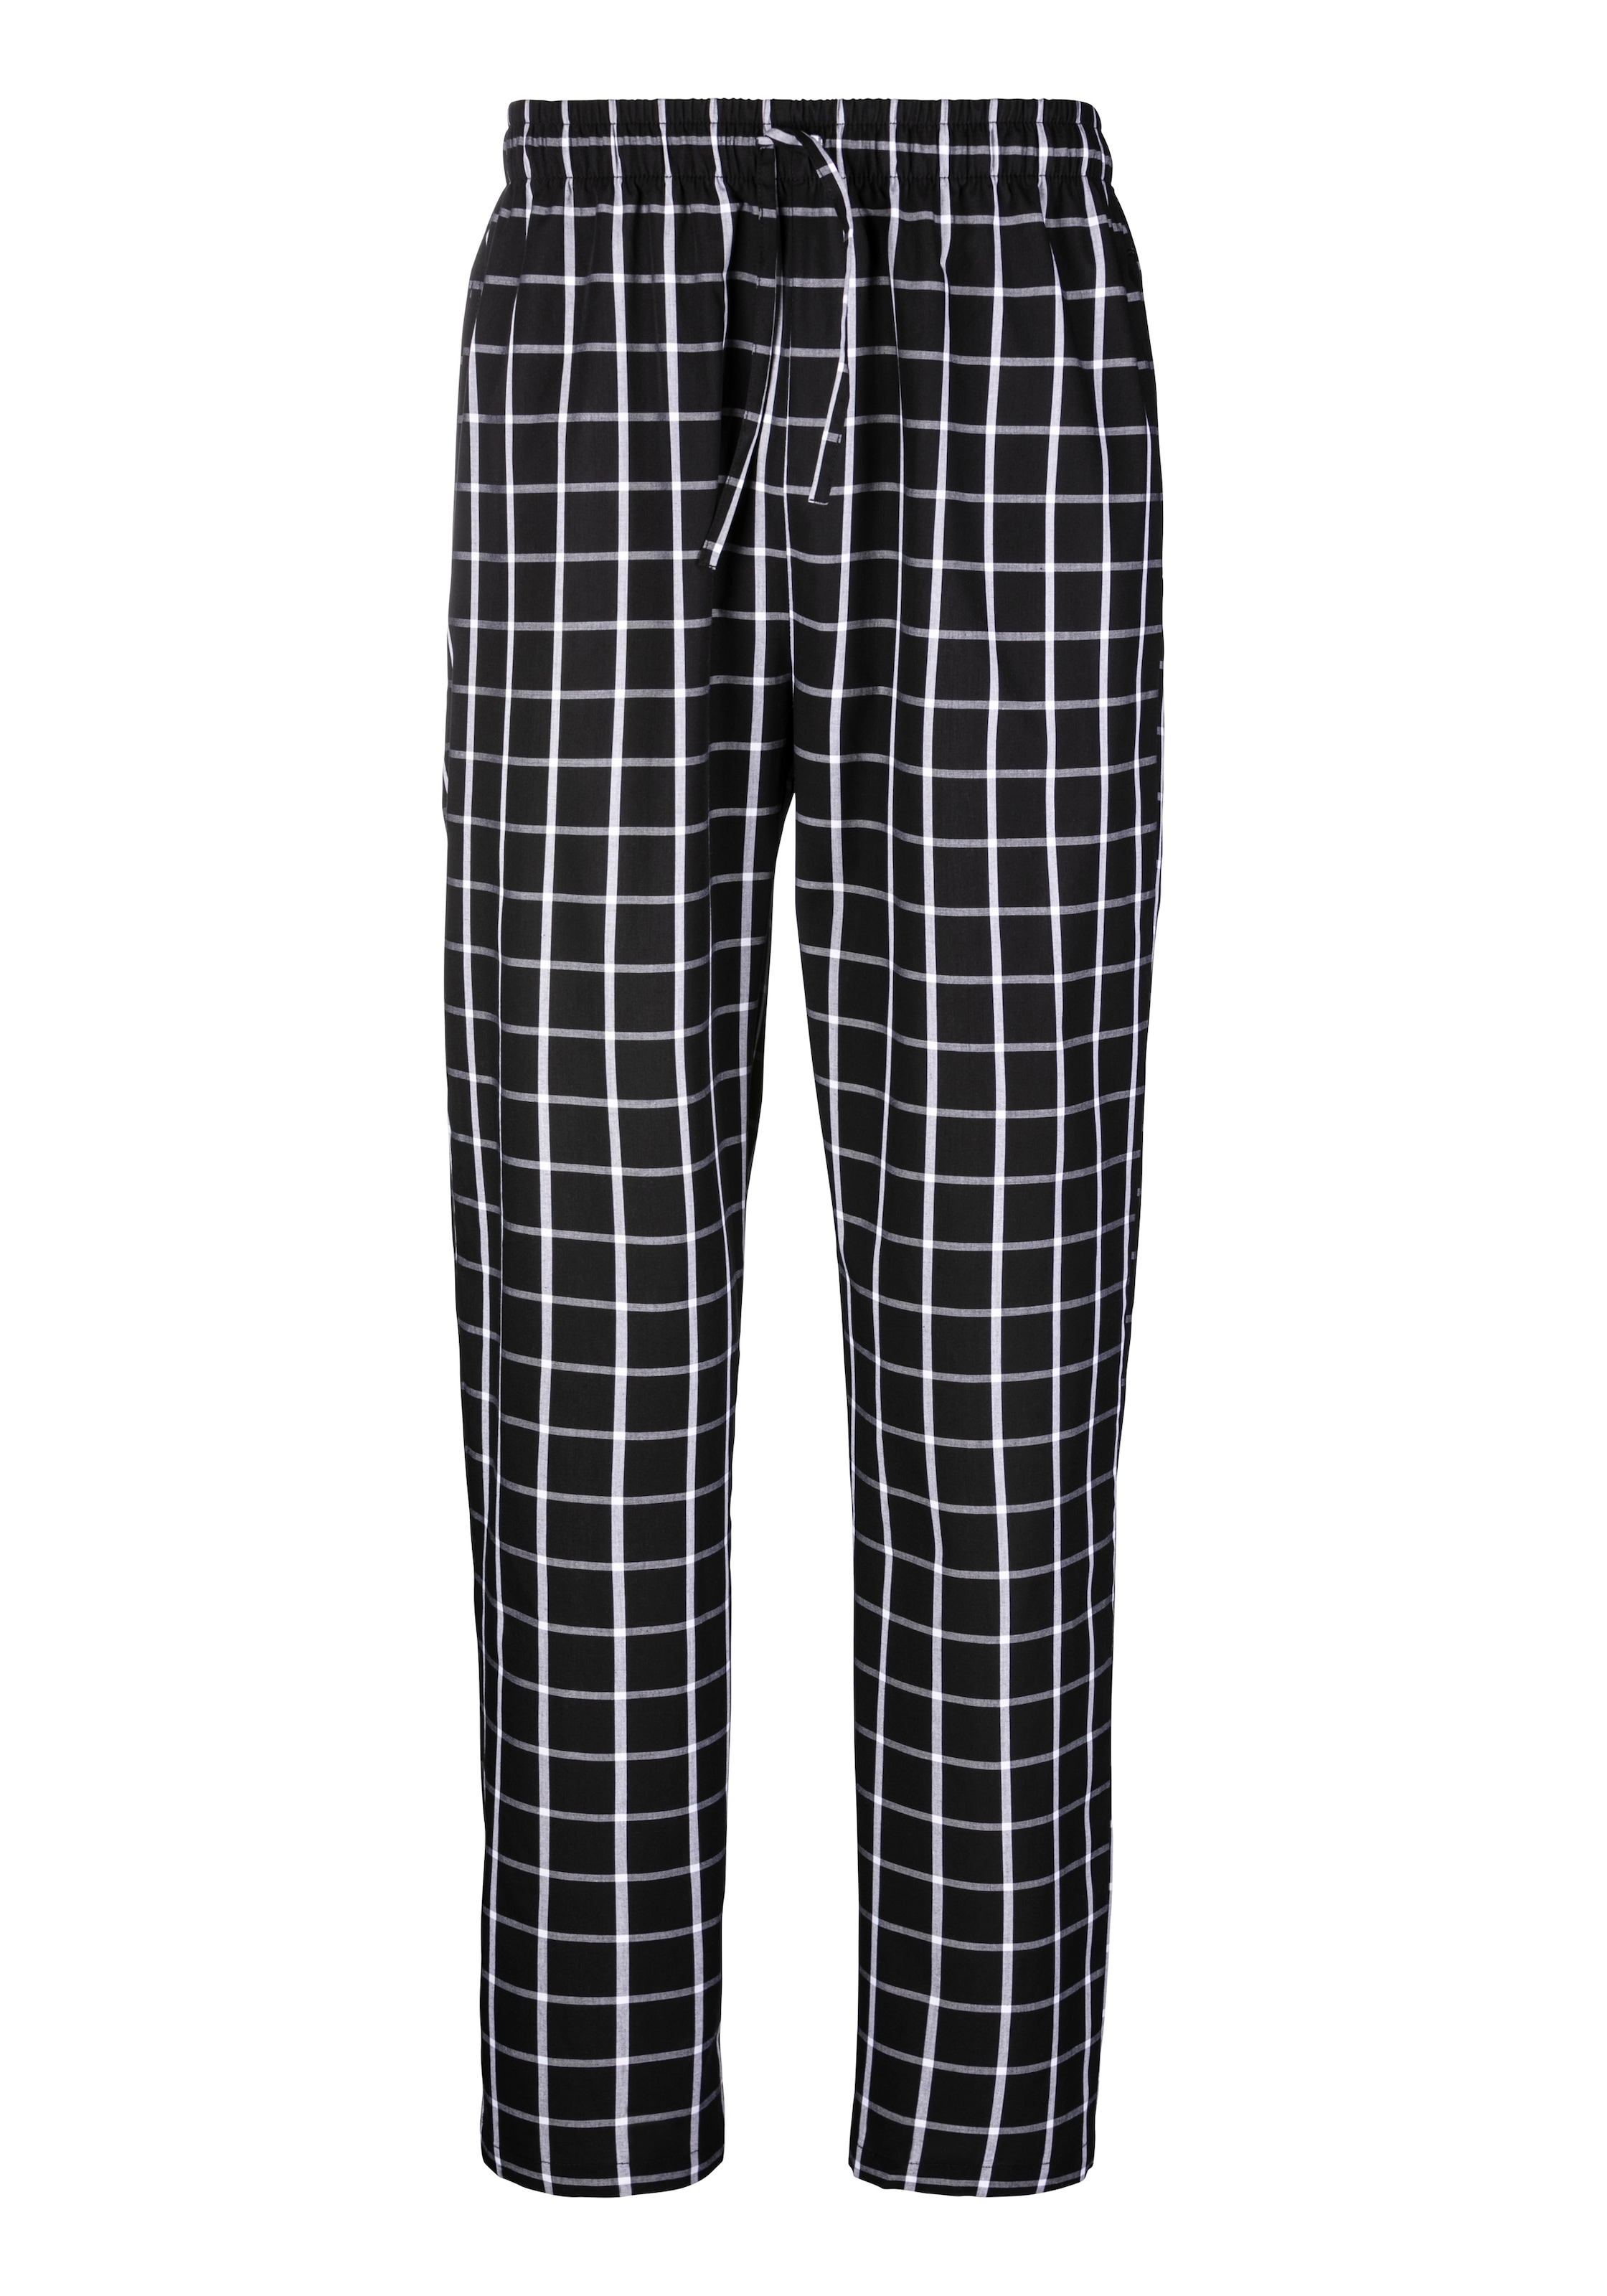 AUTHENTIC LE JOGGER Pyjama, (2 | BAUR 1 Webhose karierter tlg., mit Stück), kaufen